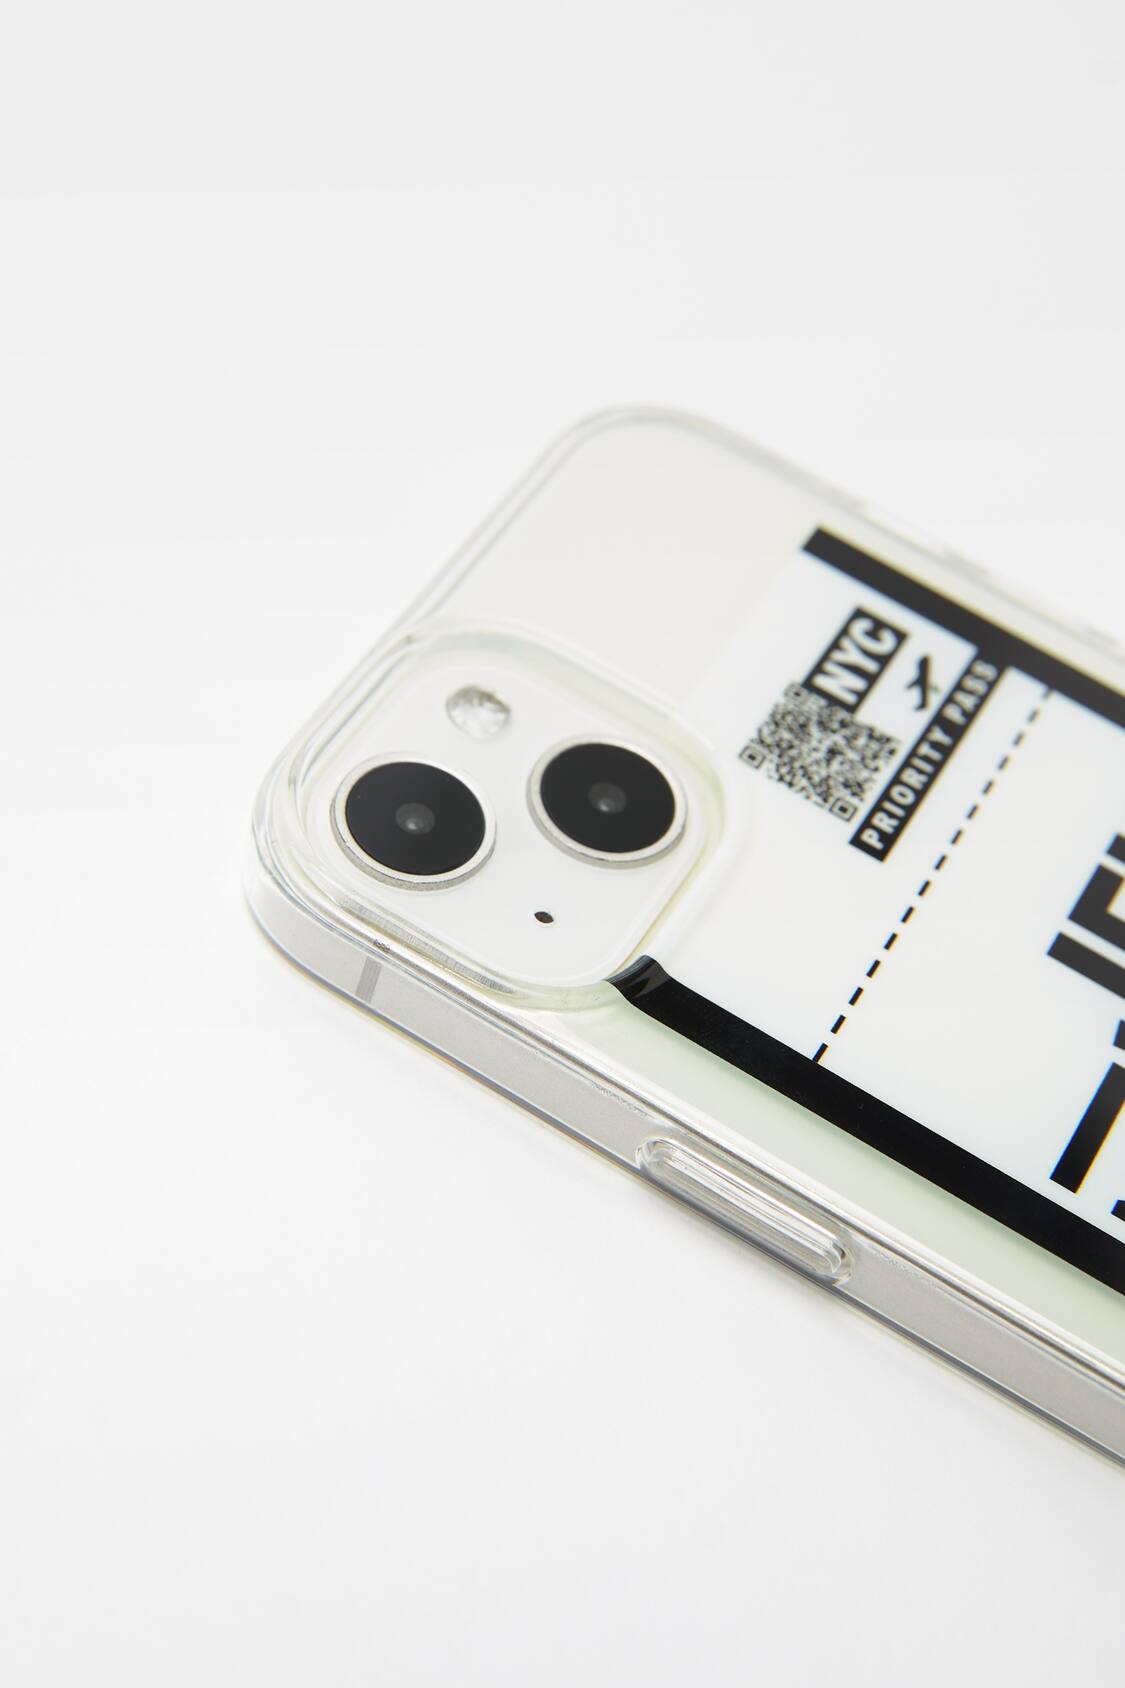 Capa iPhone com xadrez e caras sorridentes - PULL&BEAR